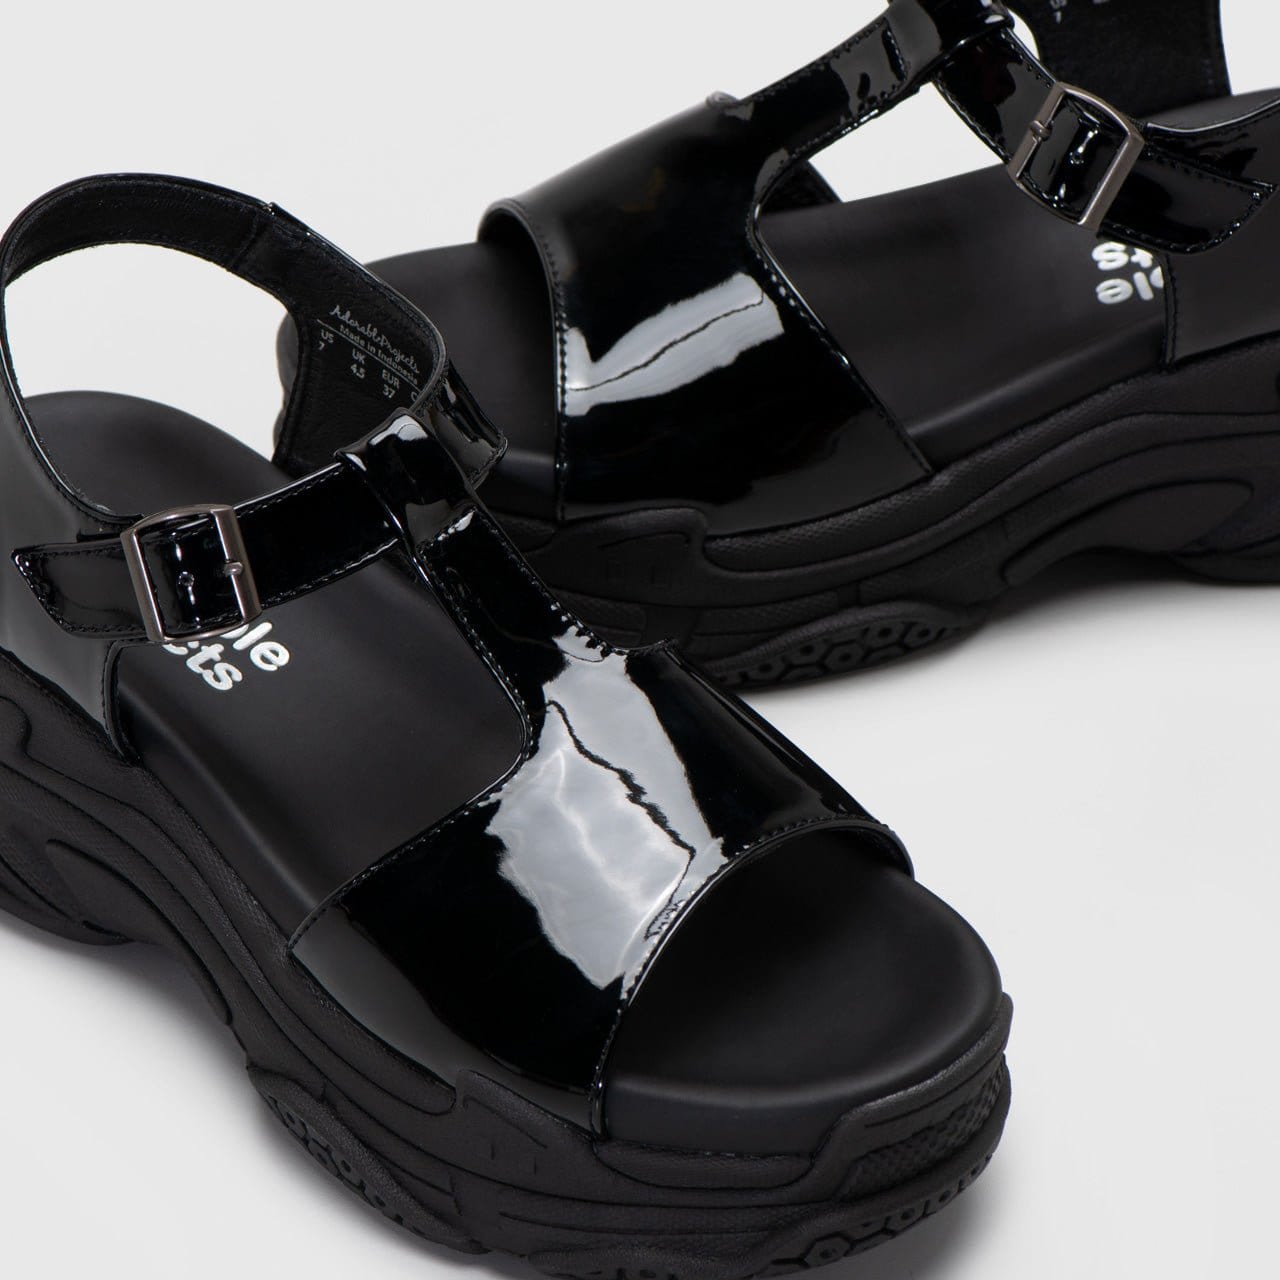 Adorable Projects Official Sandals Frisk Sandals Black